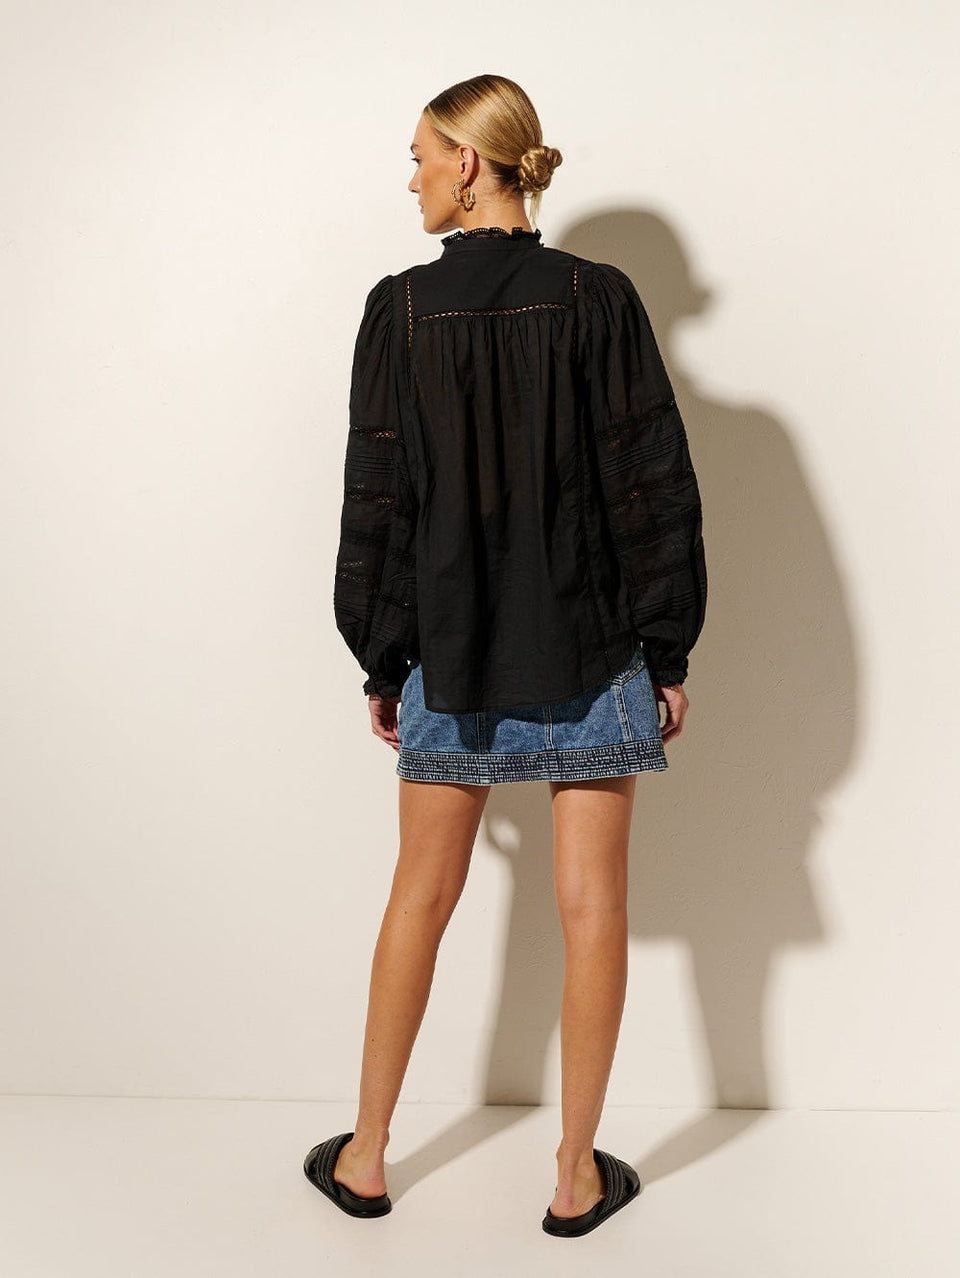 KIVARI Delia Blouse | Model wears Black Blouse Back View